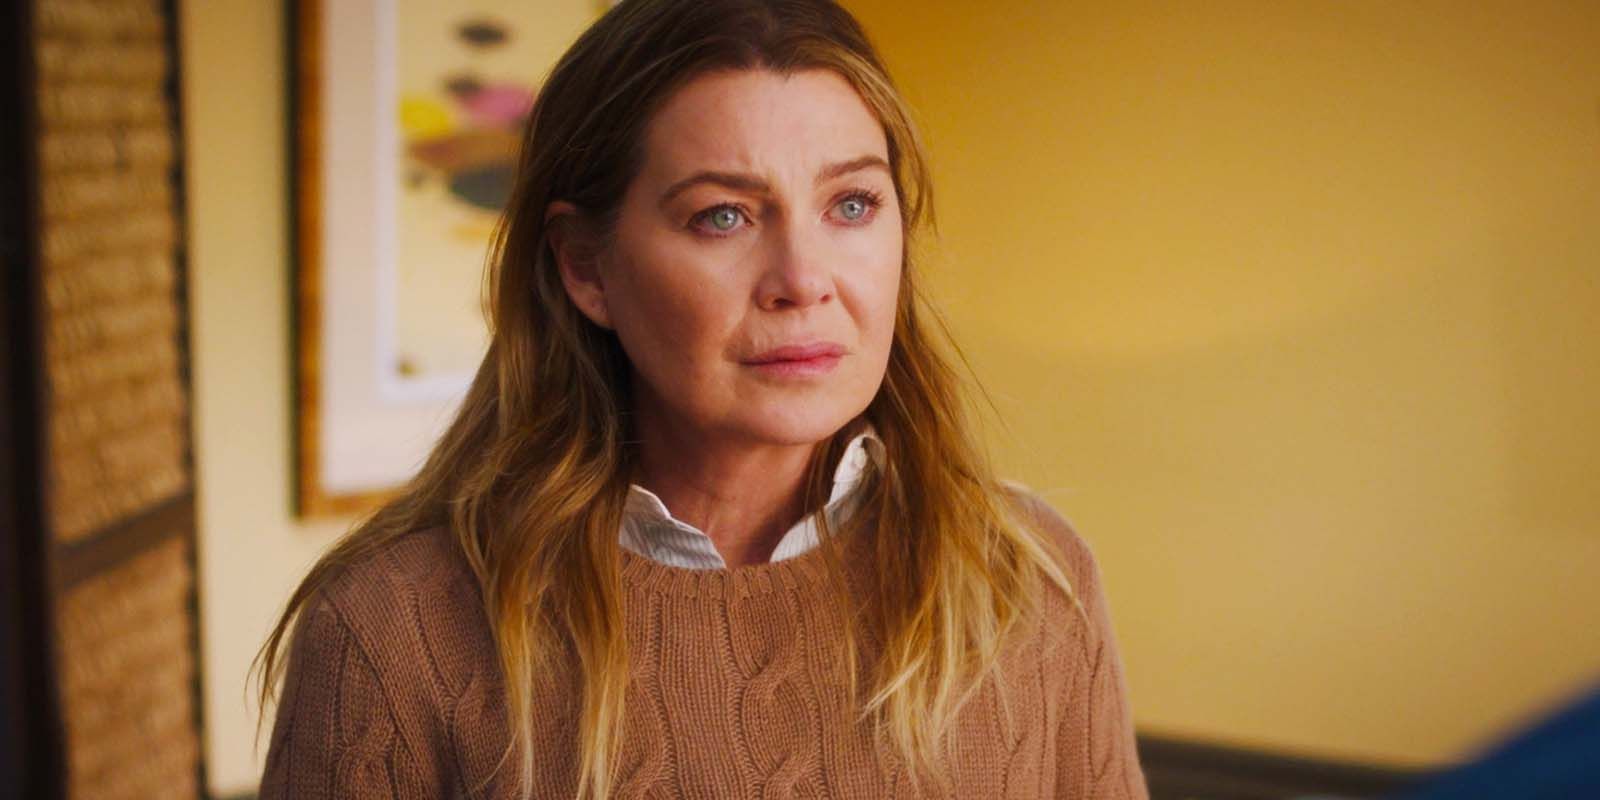 Ellen Pompeo as Meredith Grey looking worried in Grey's Anatomy season 20, episode 5